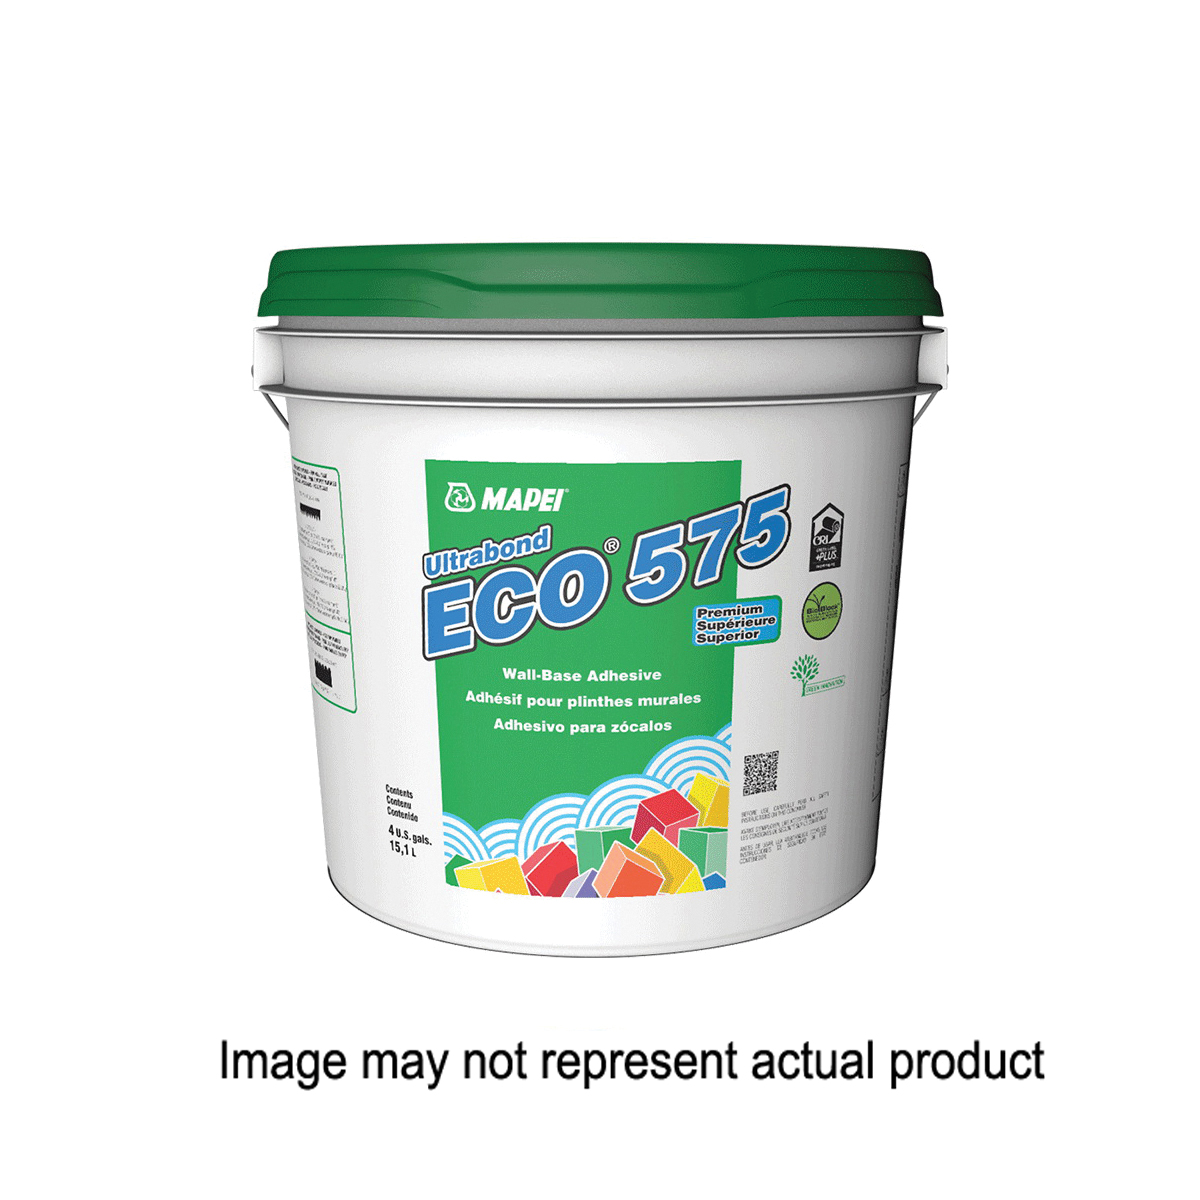 Ultrabond ECO 575 1005004 Wall Base Adhesive, White, 1 gal